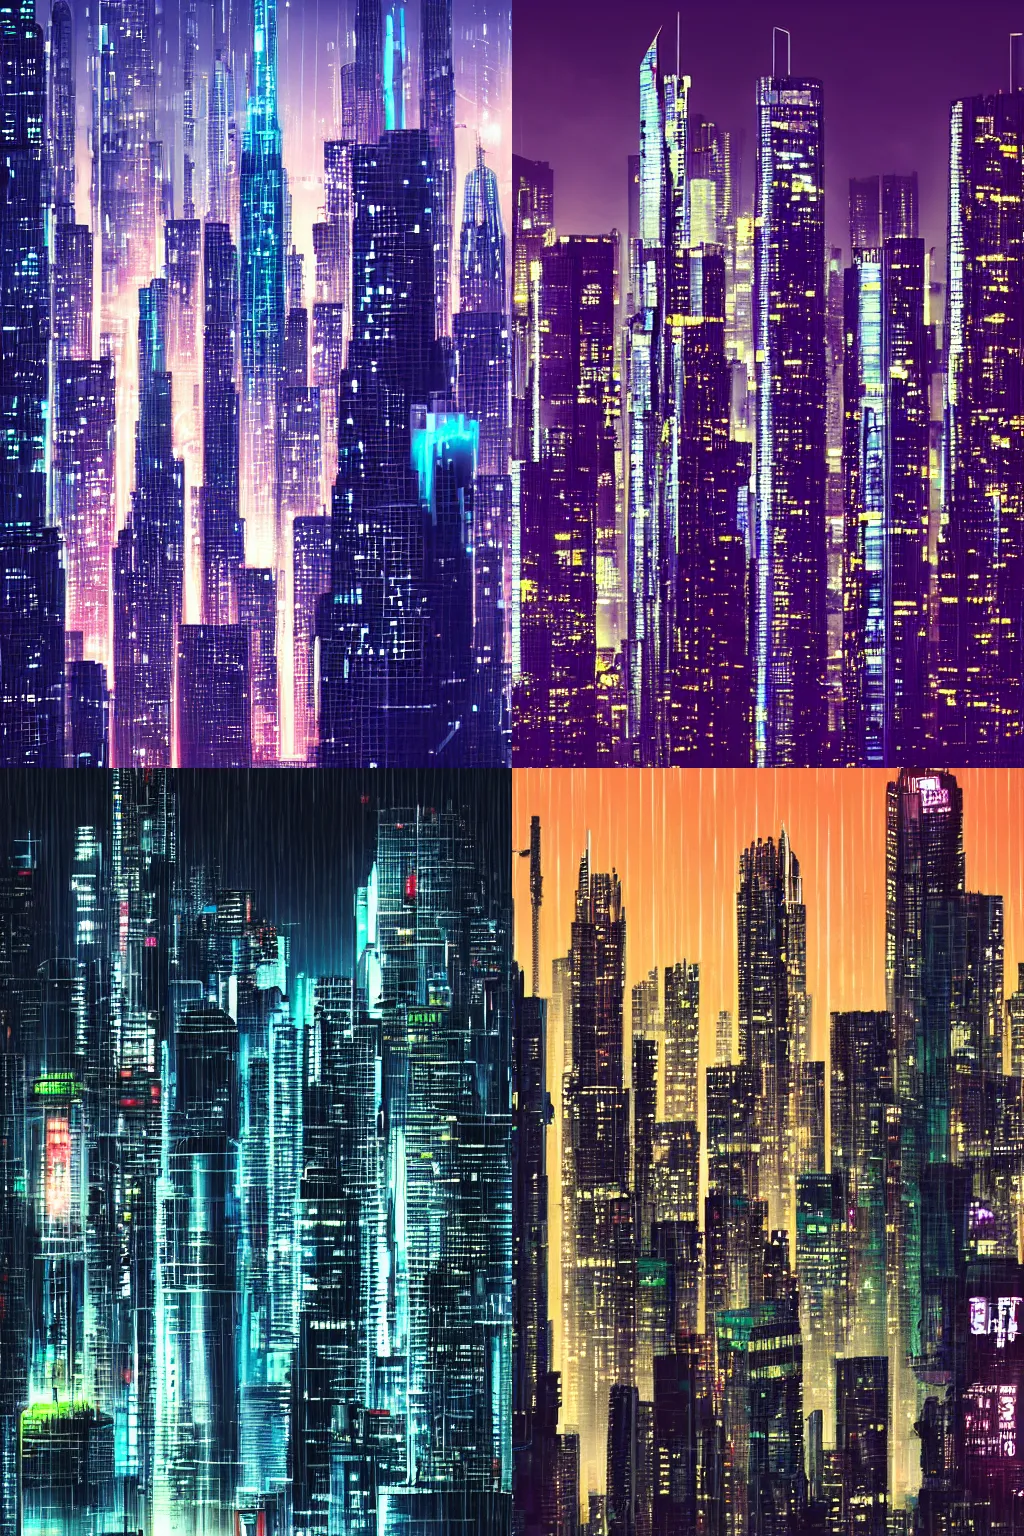 Prompt: cyberpunk cityscape, tall skyscrapers at night, rain